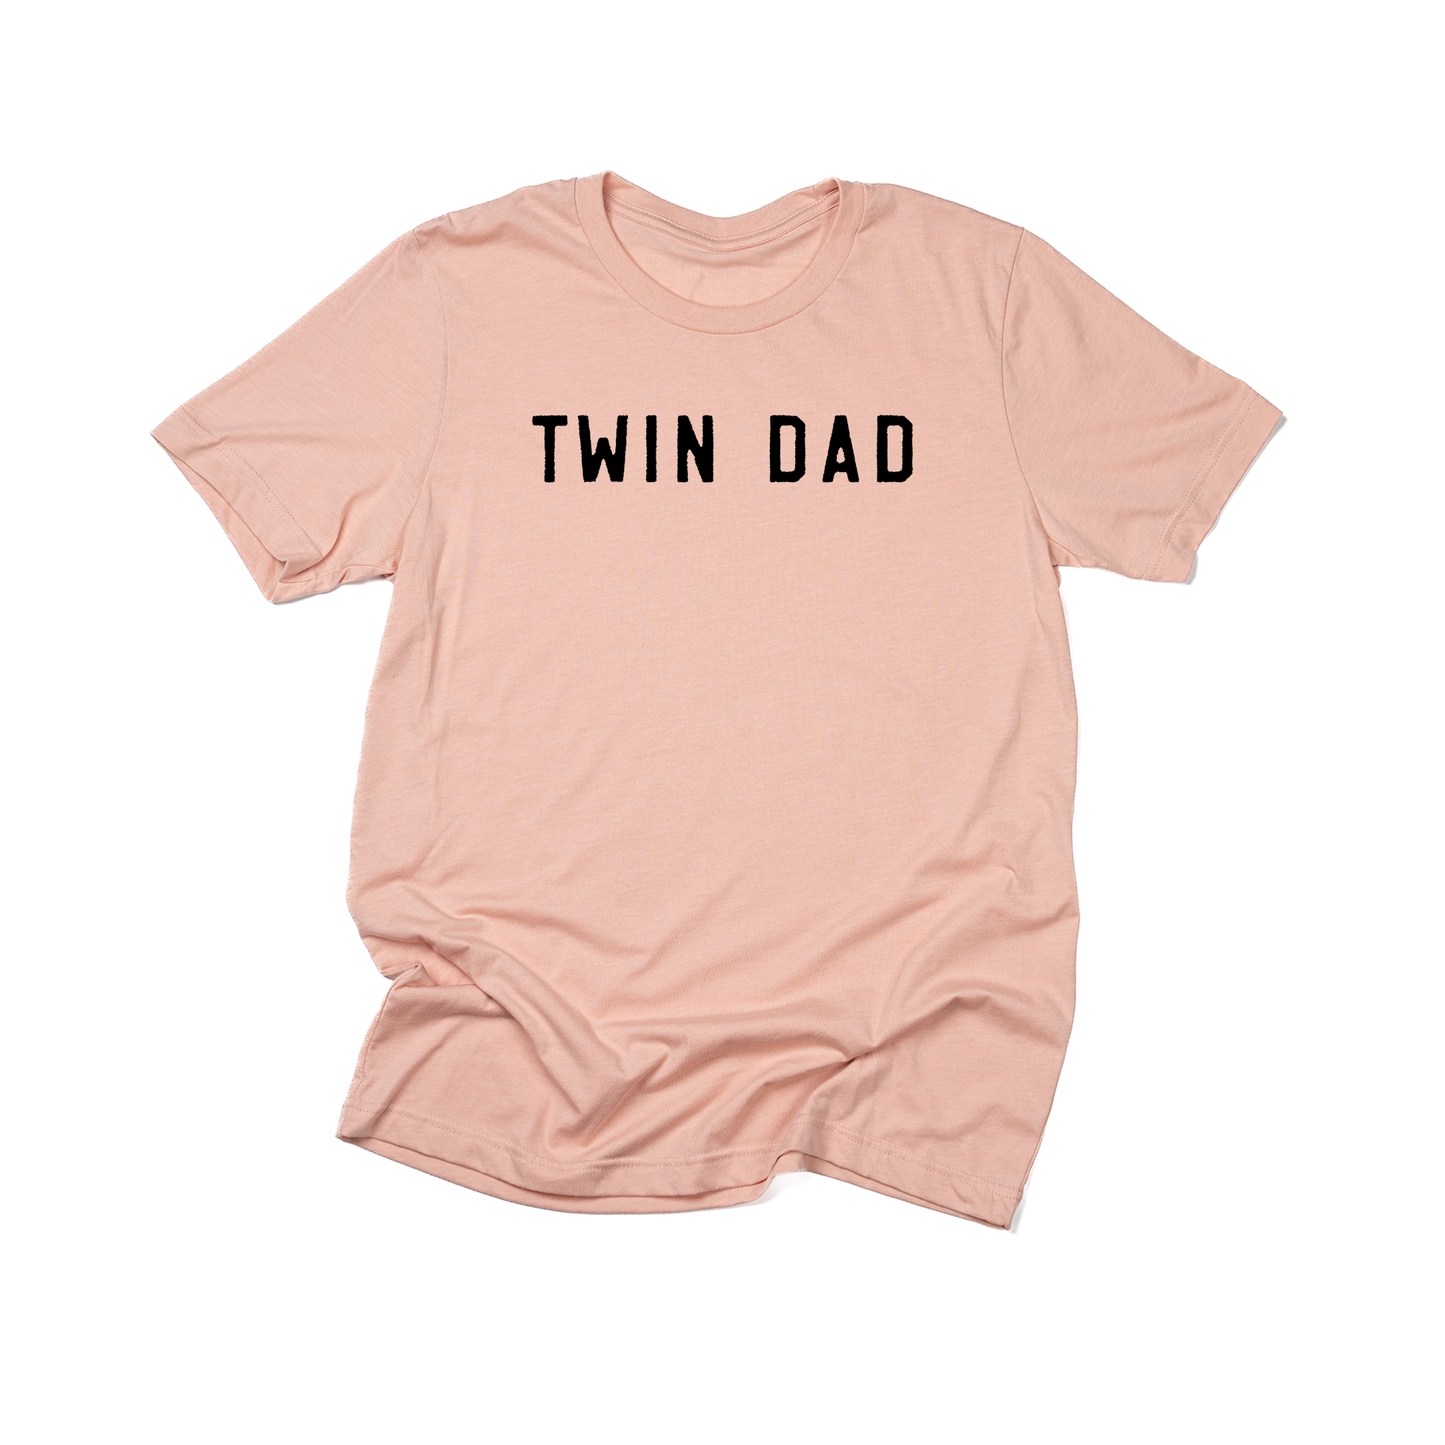 Twin Dad (Black) - Tee (Peach)